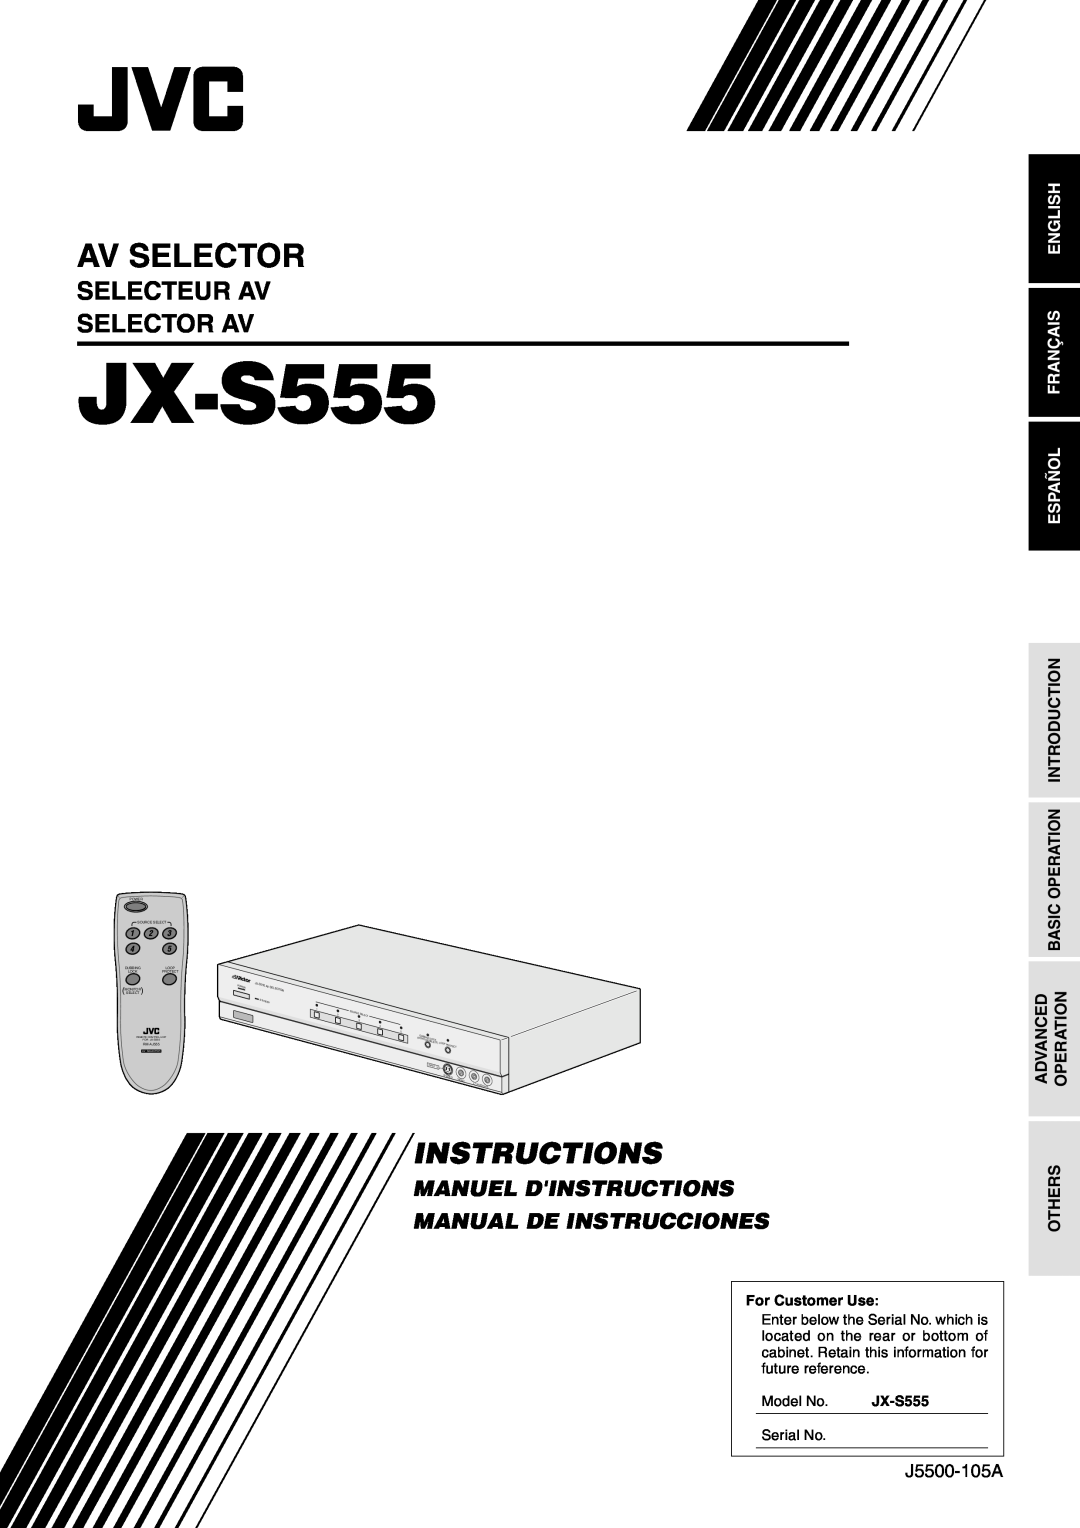 JVC JX-B555 manual Instructions, Selecteur Av Selector Av, JX-S555, Manuel Dinstructions Manual De Instrucciones, Advanced 